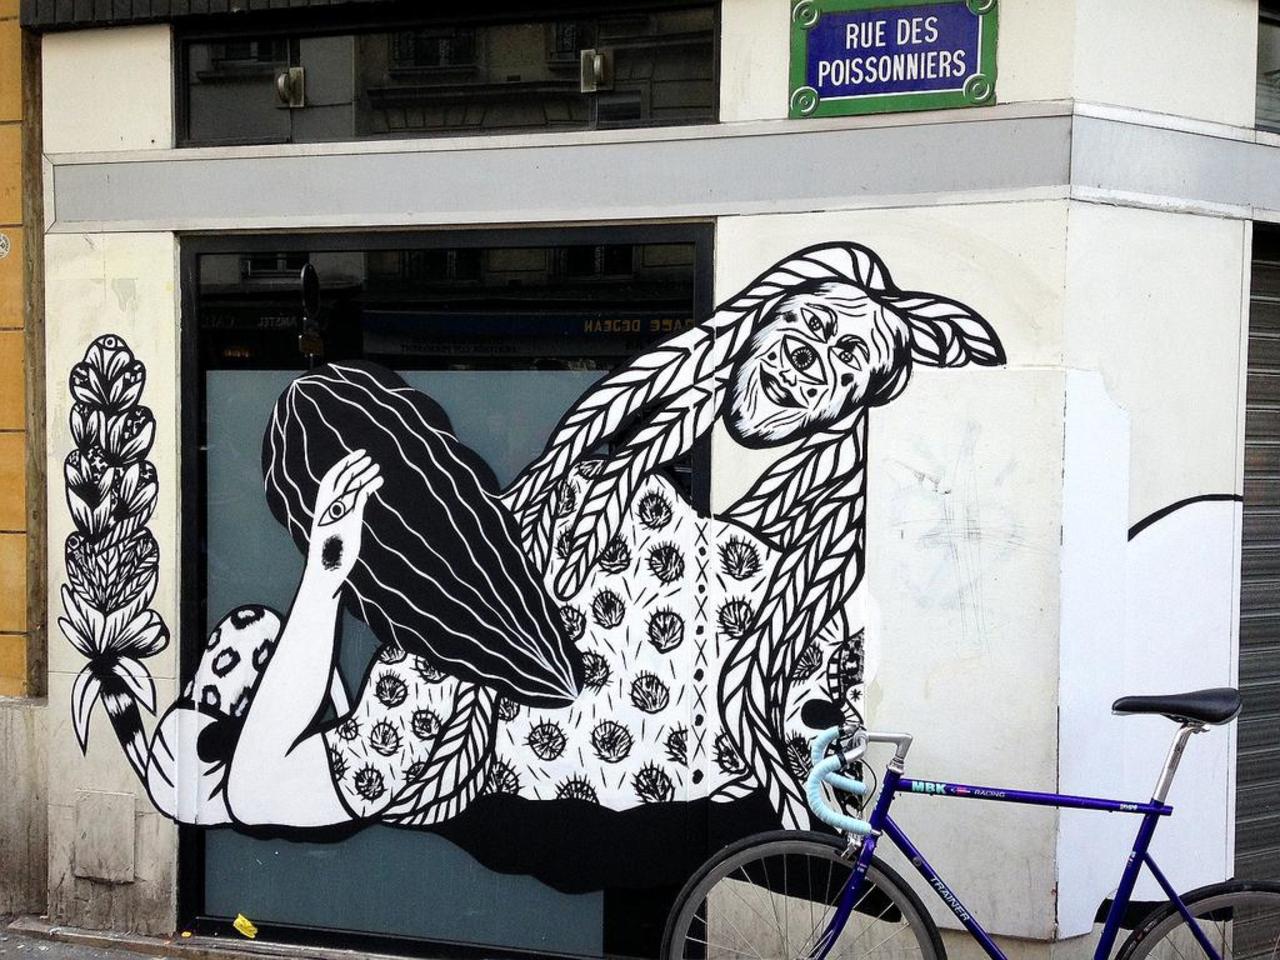 Street Art by Katjastroph in #Paris http://www.urbacolors.com #art #mural #graffiti #streetart http://t.co/CKWt7EdRBO